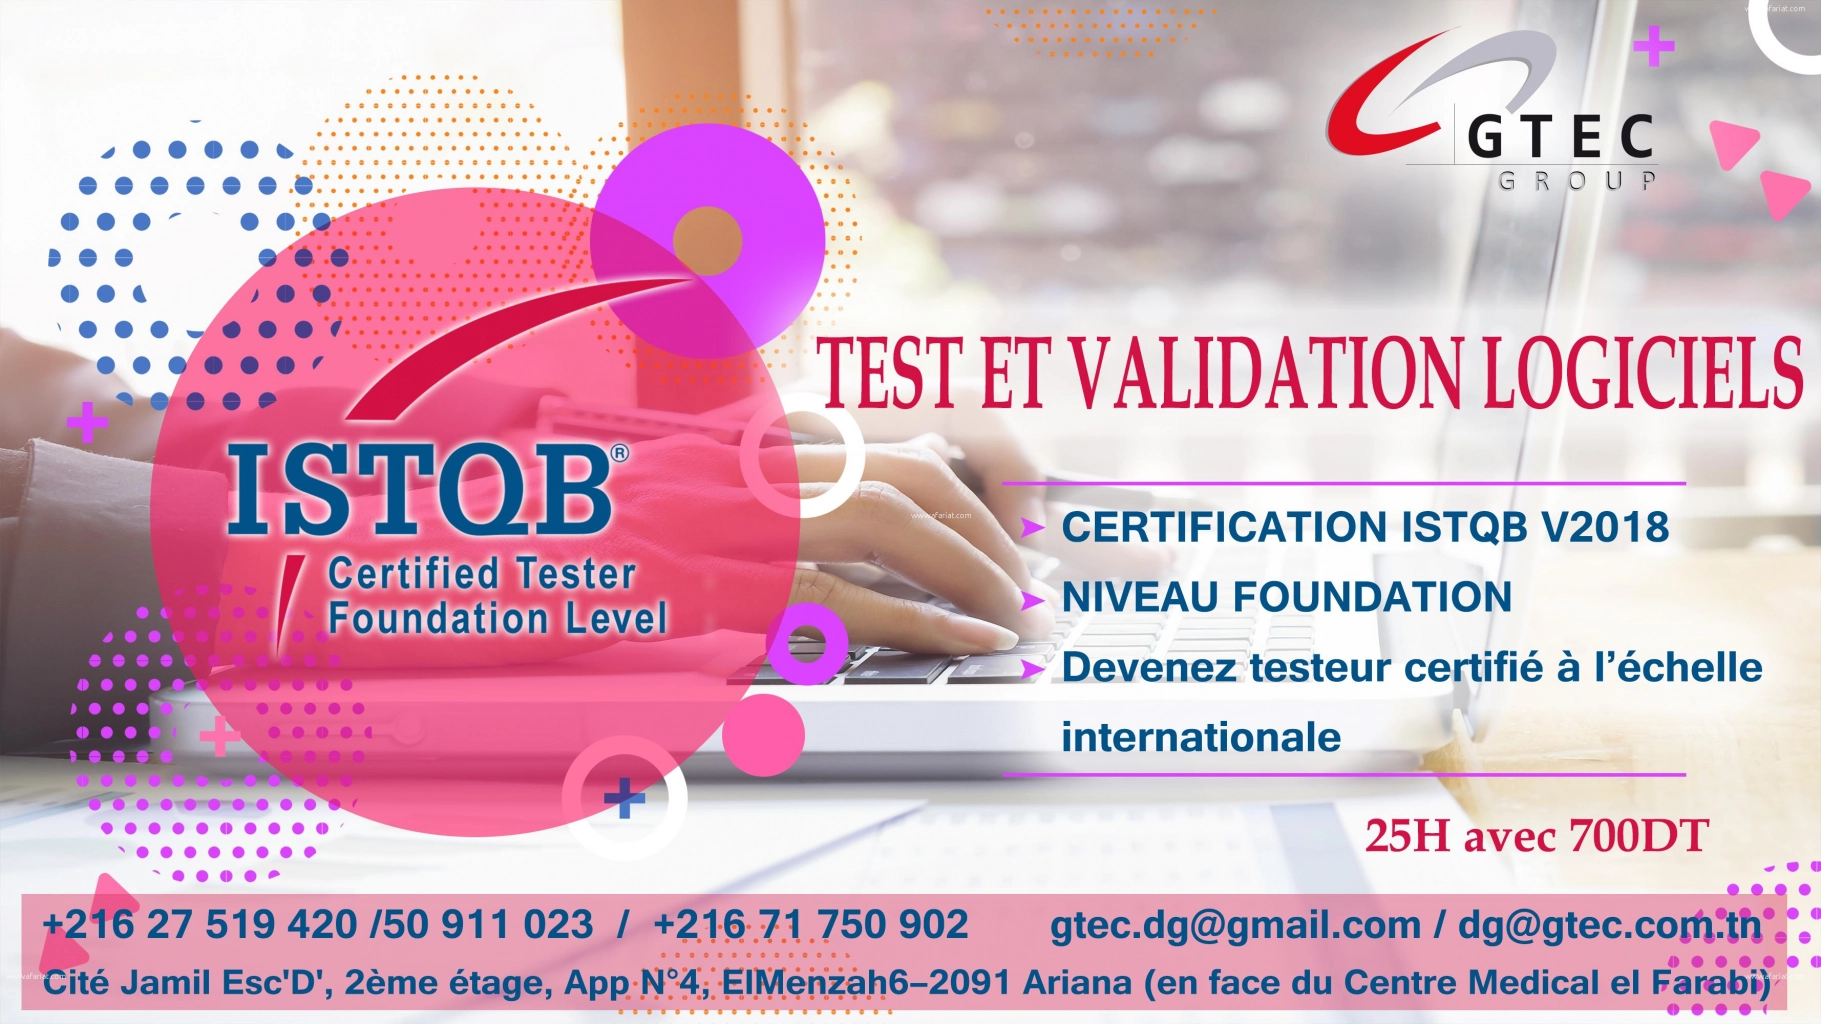 Certification ISTQB niveau Foundation